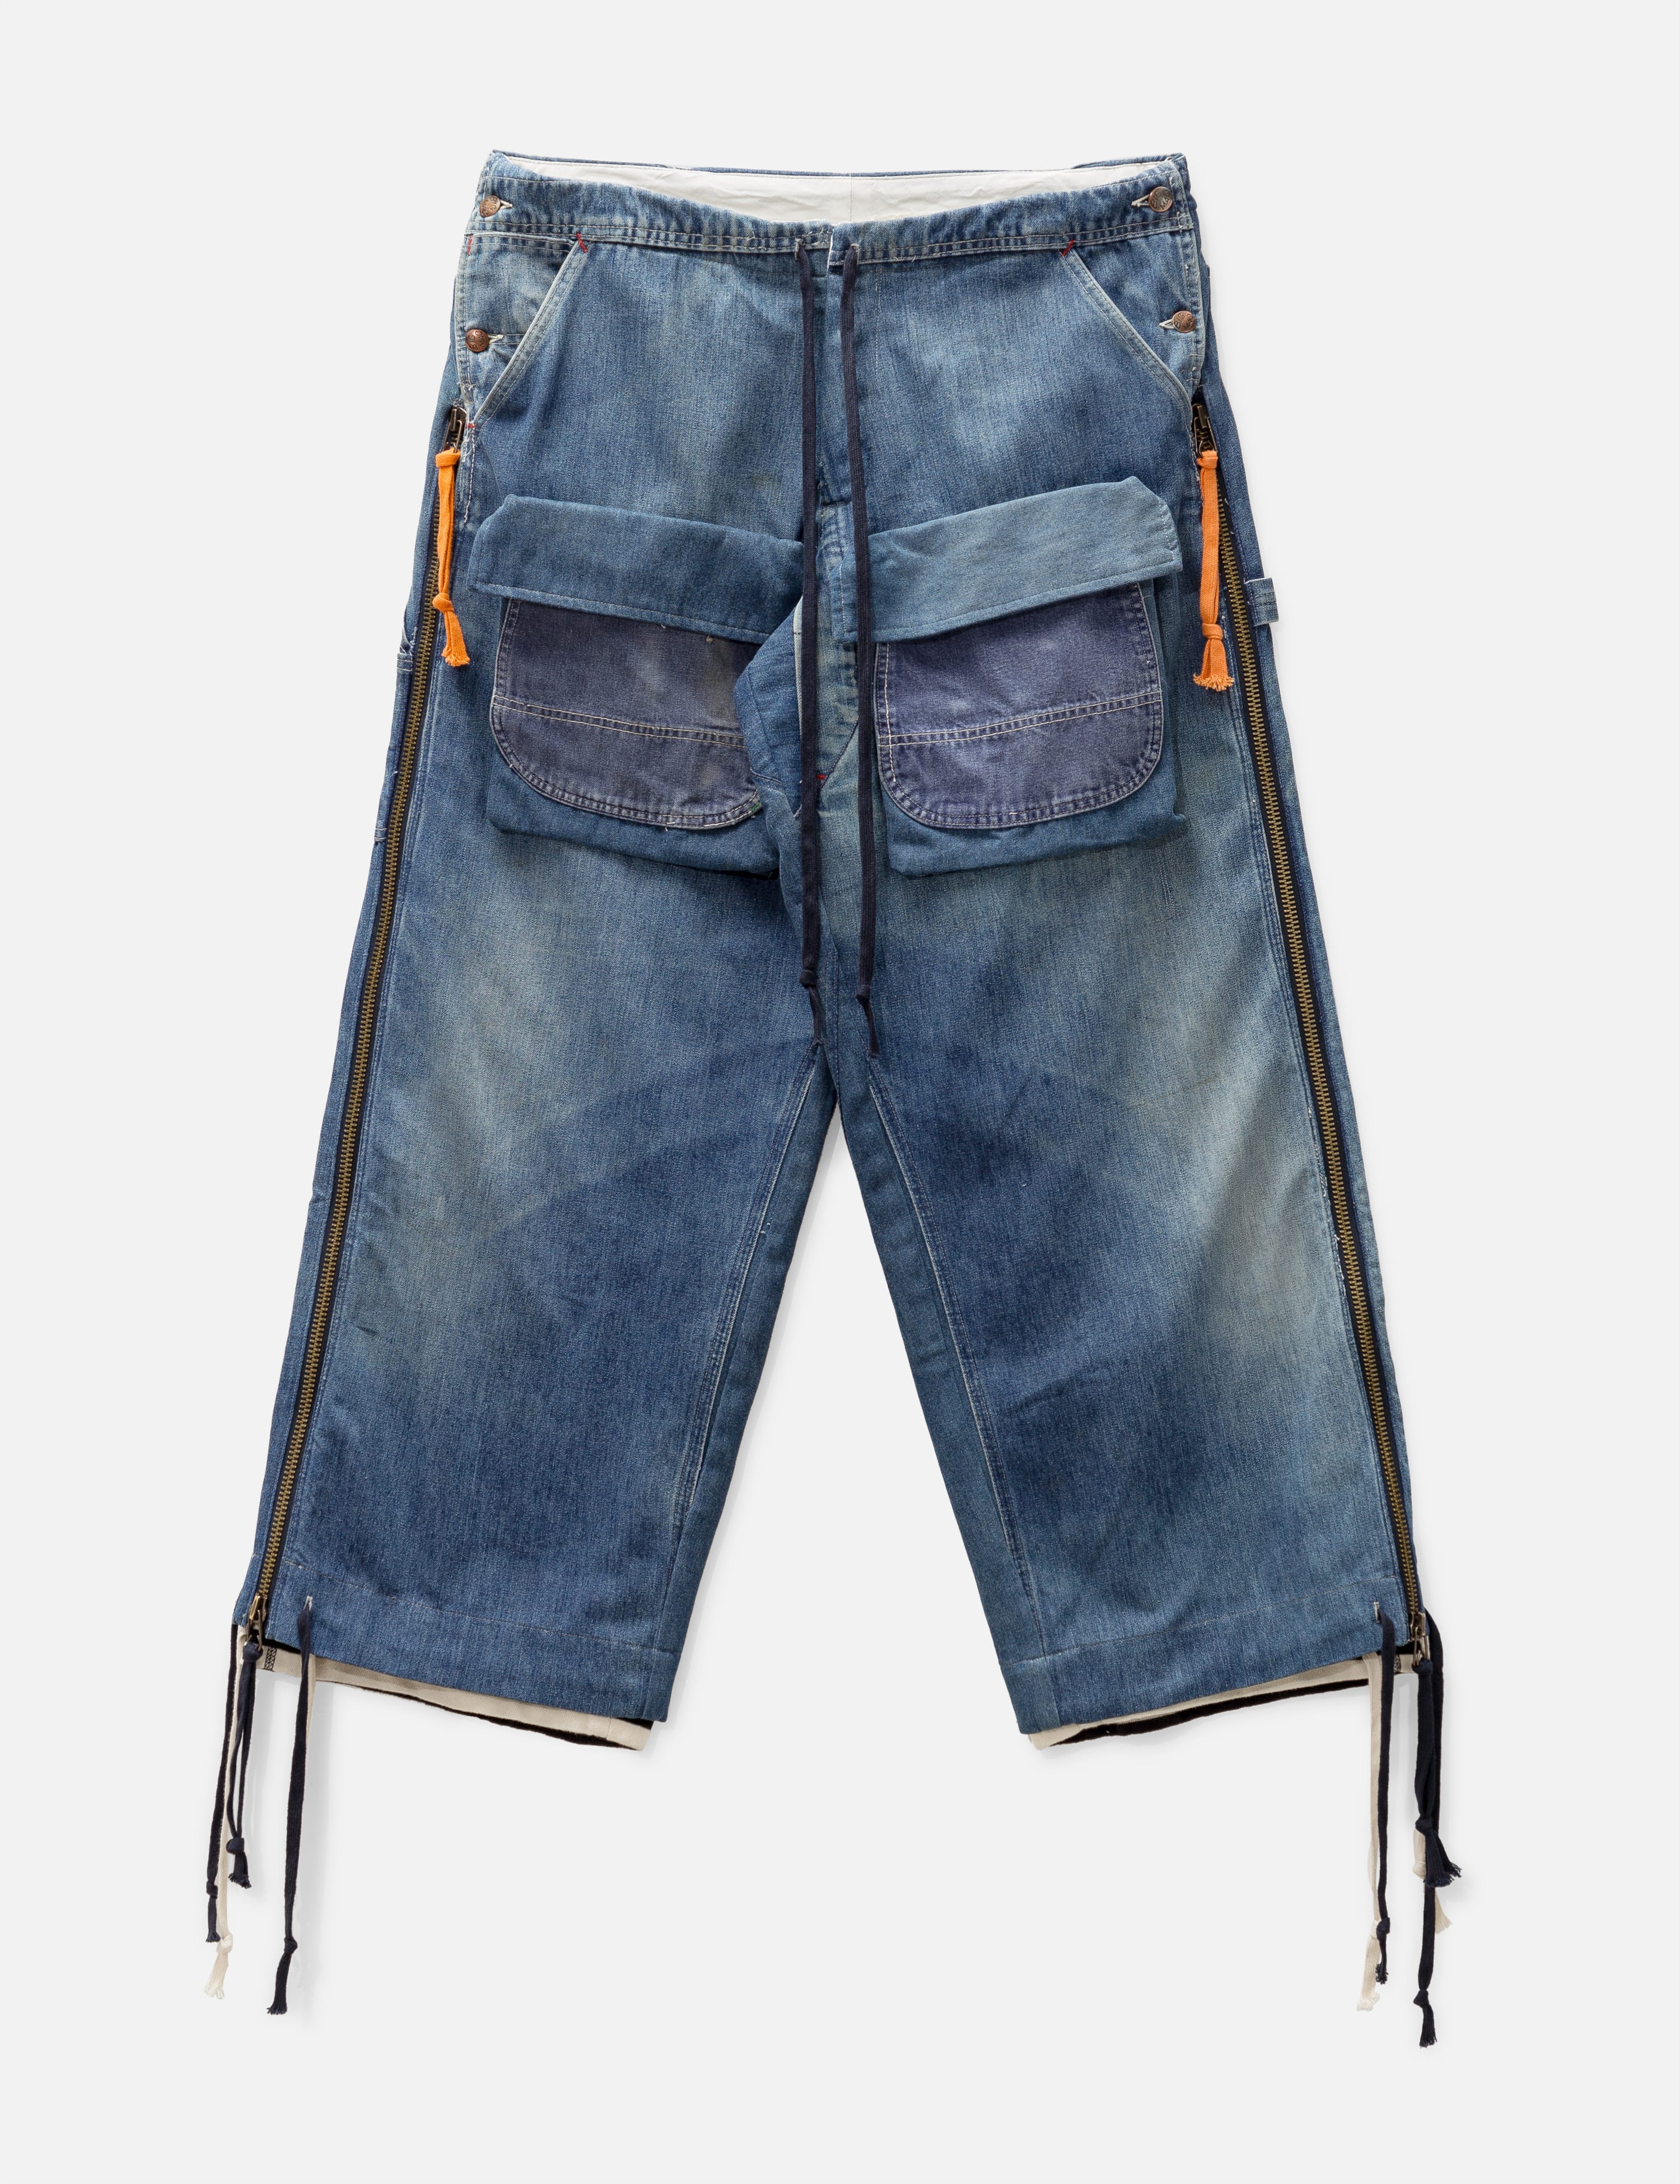 GREG LAUREN - Denim Stripe Wide Leg Zip Jeans | HBX - Globally